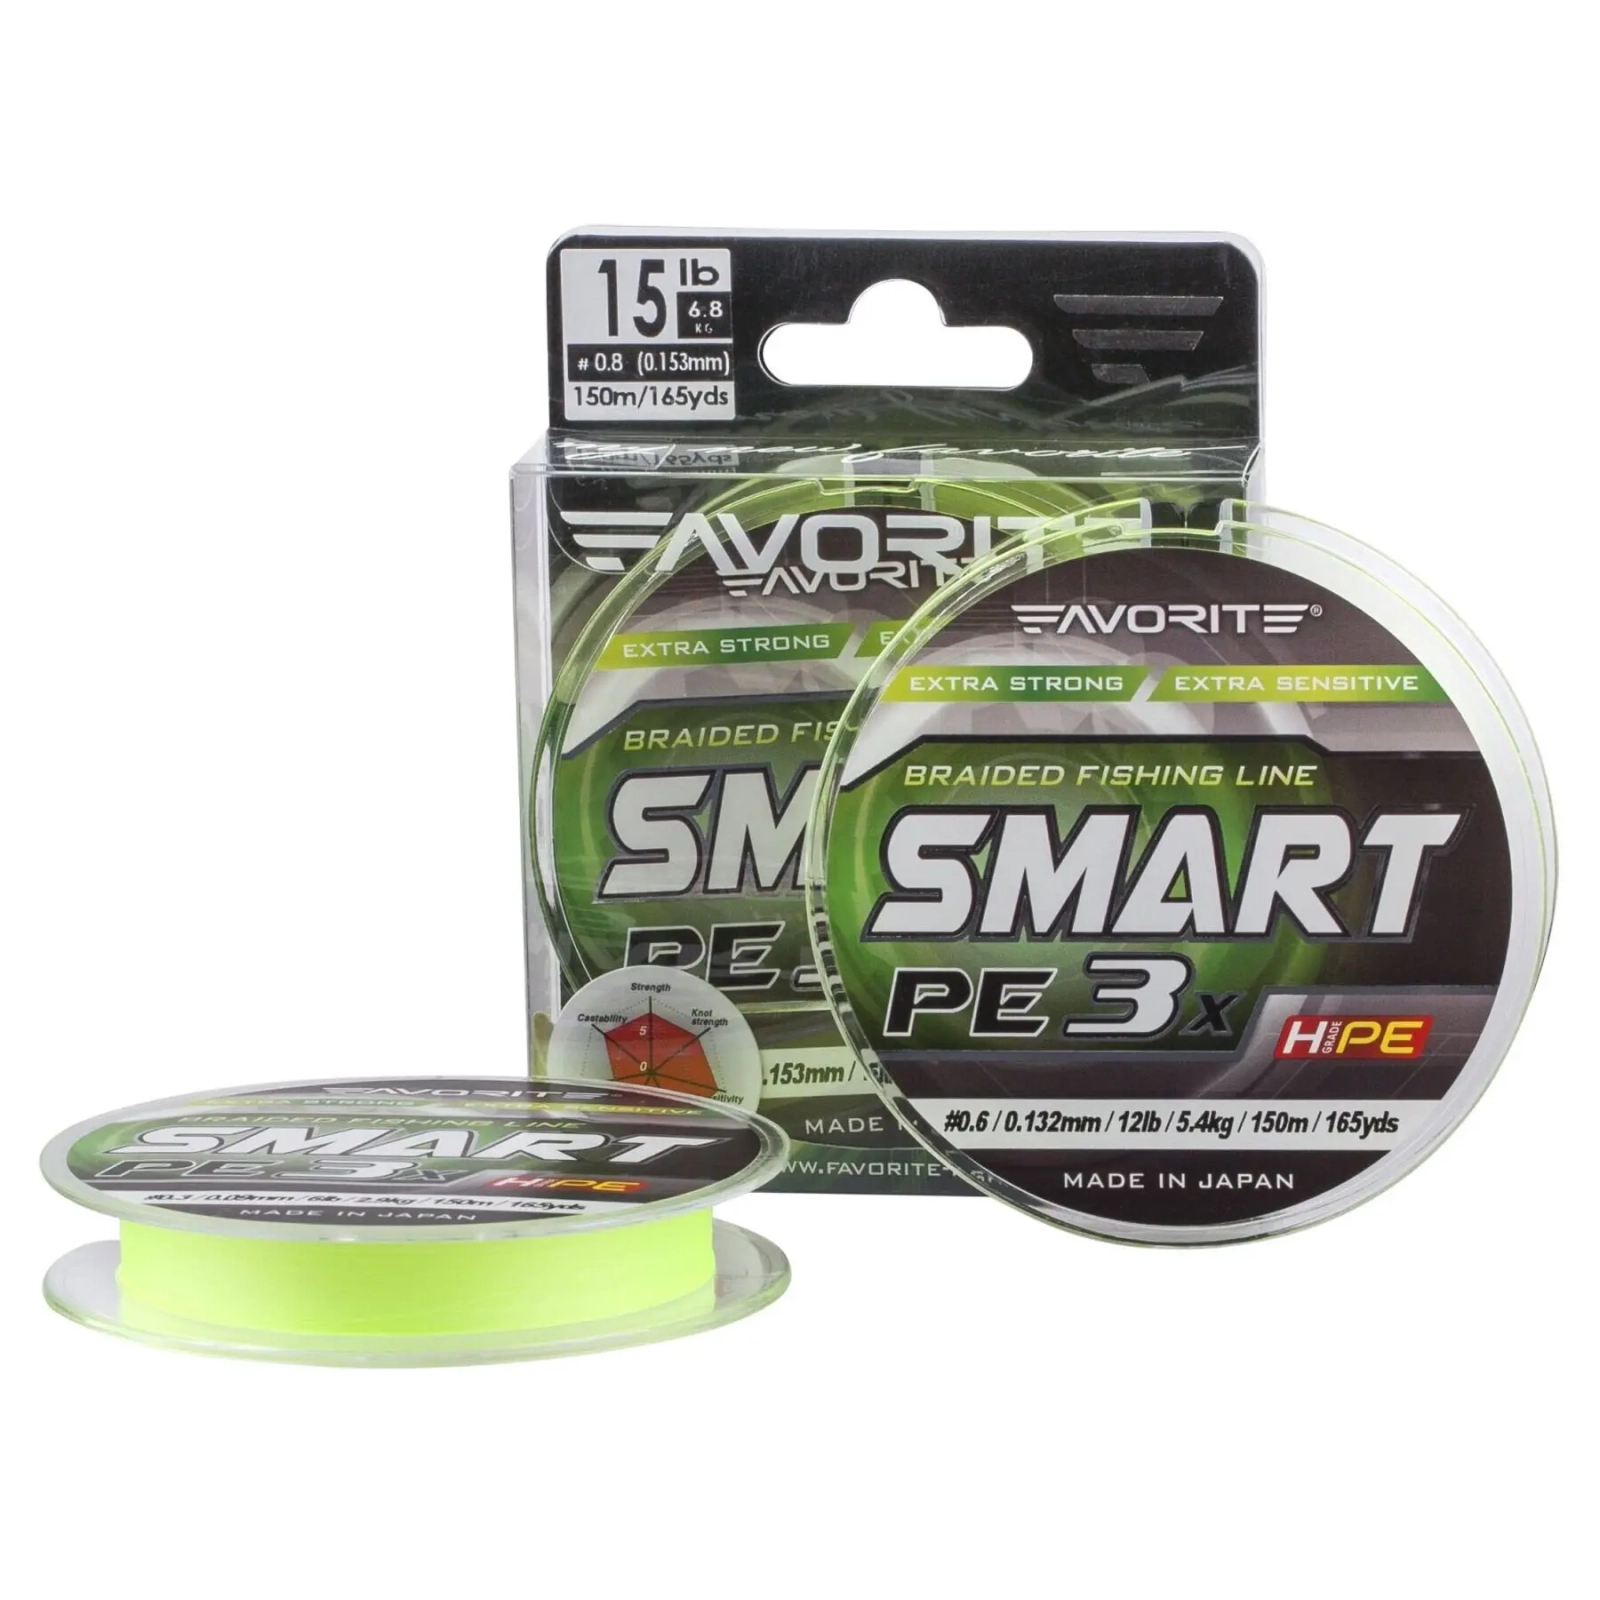 Шнур Favorite Smart PE 3x 150м 0.6/0.132mm 12lb/5.4kg Light Green (1693.10.66)